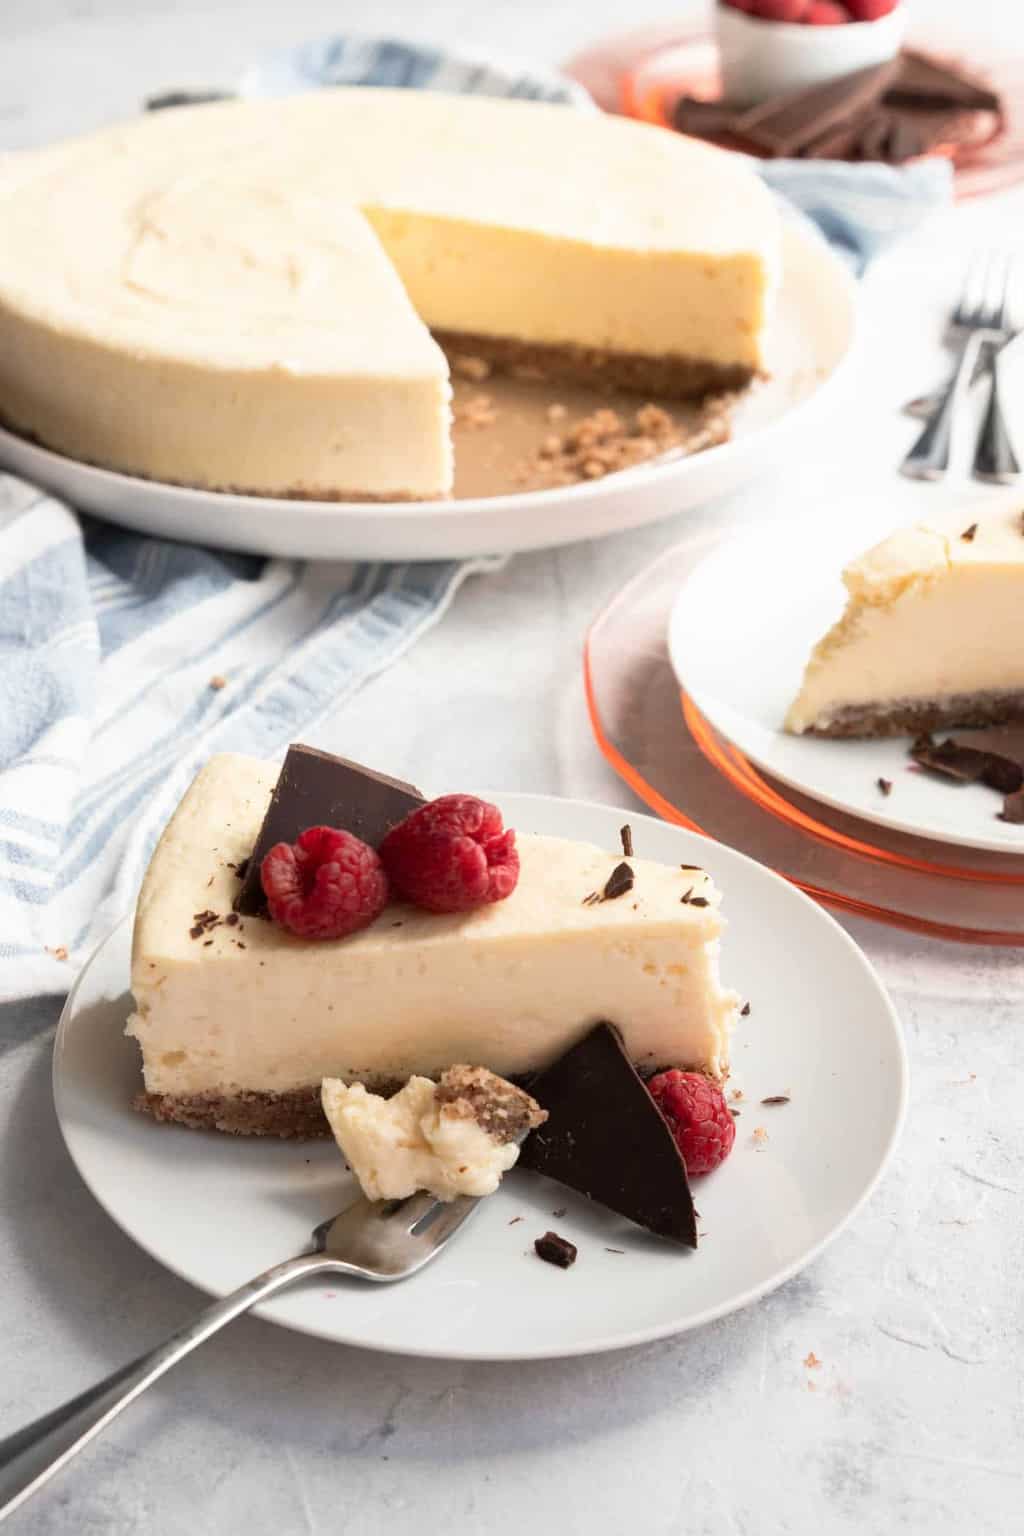 6 Inch Keto Cheesecake Recipe - The Best Keto Cheesecake ...